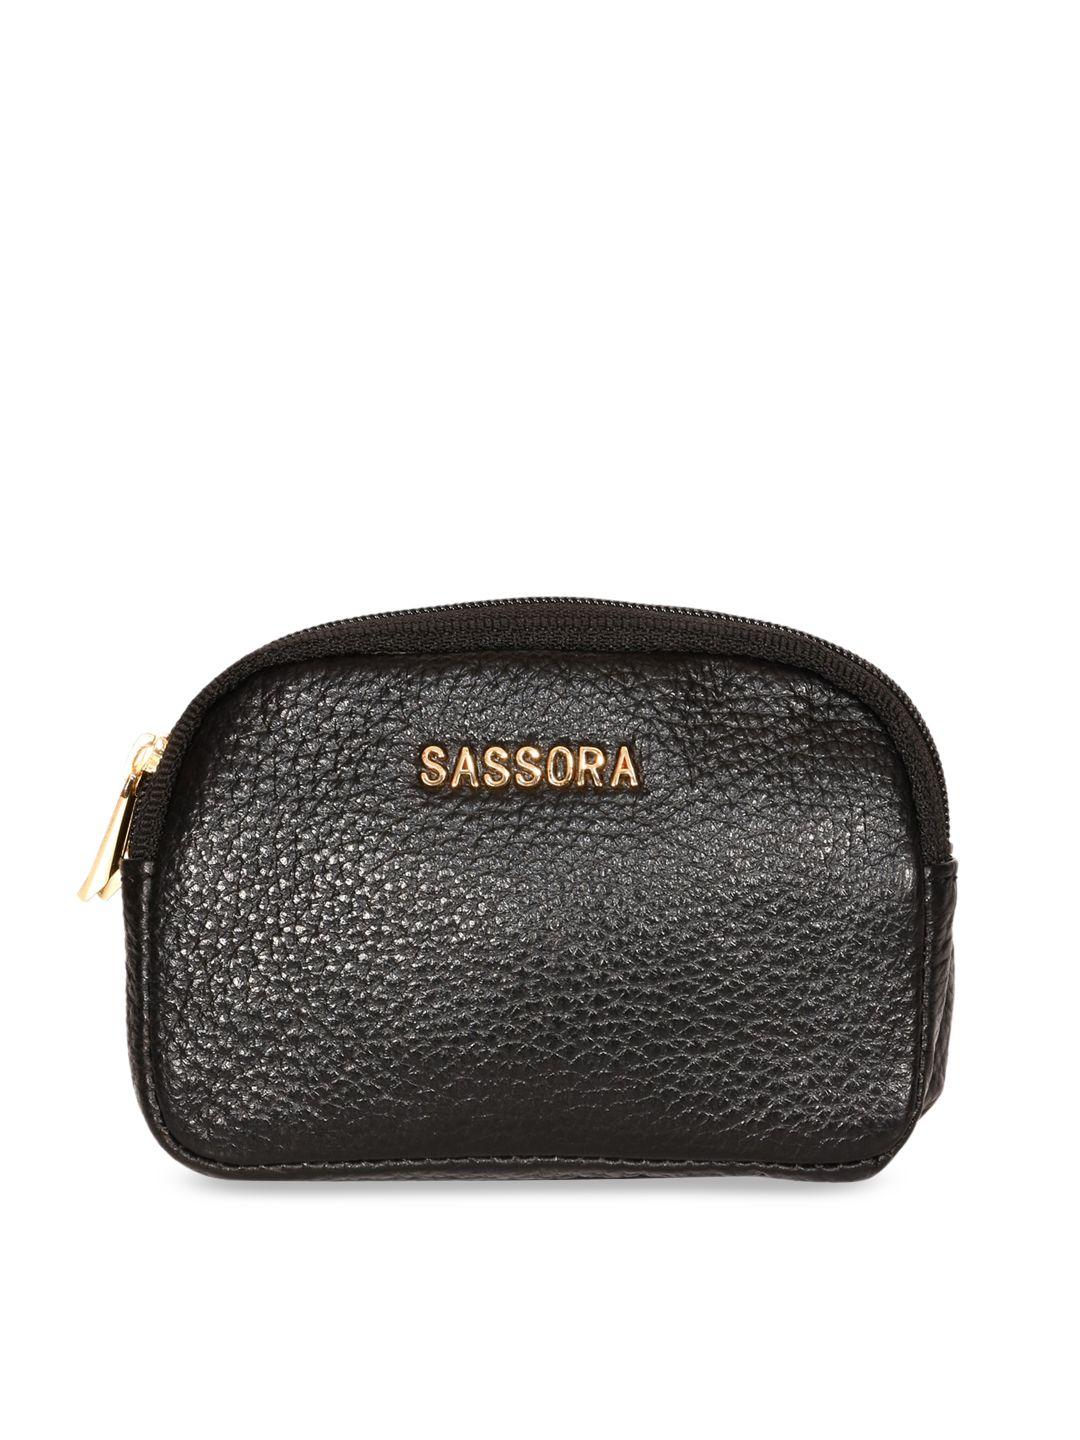 sassora black solid travel pouch